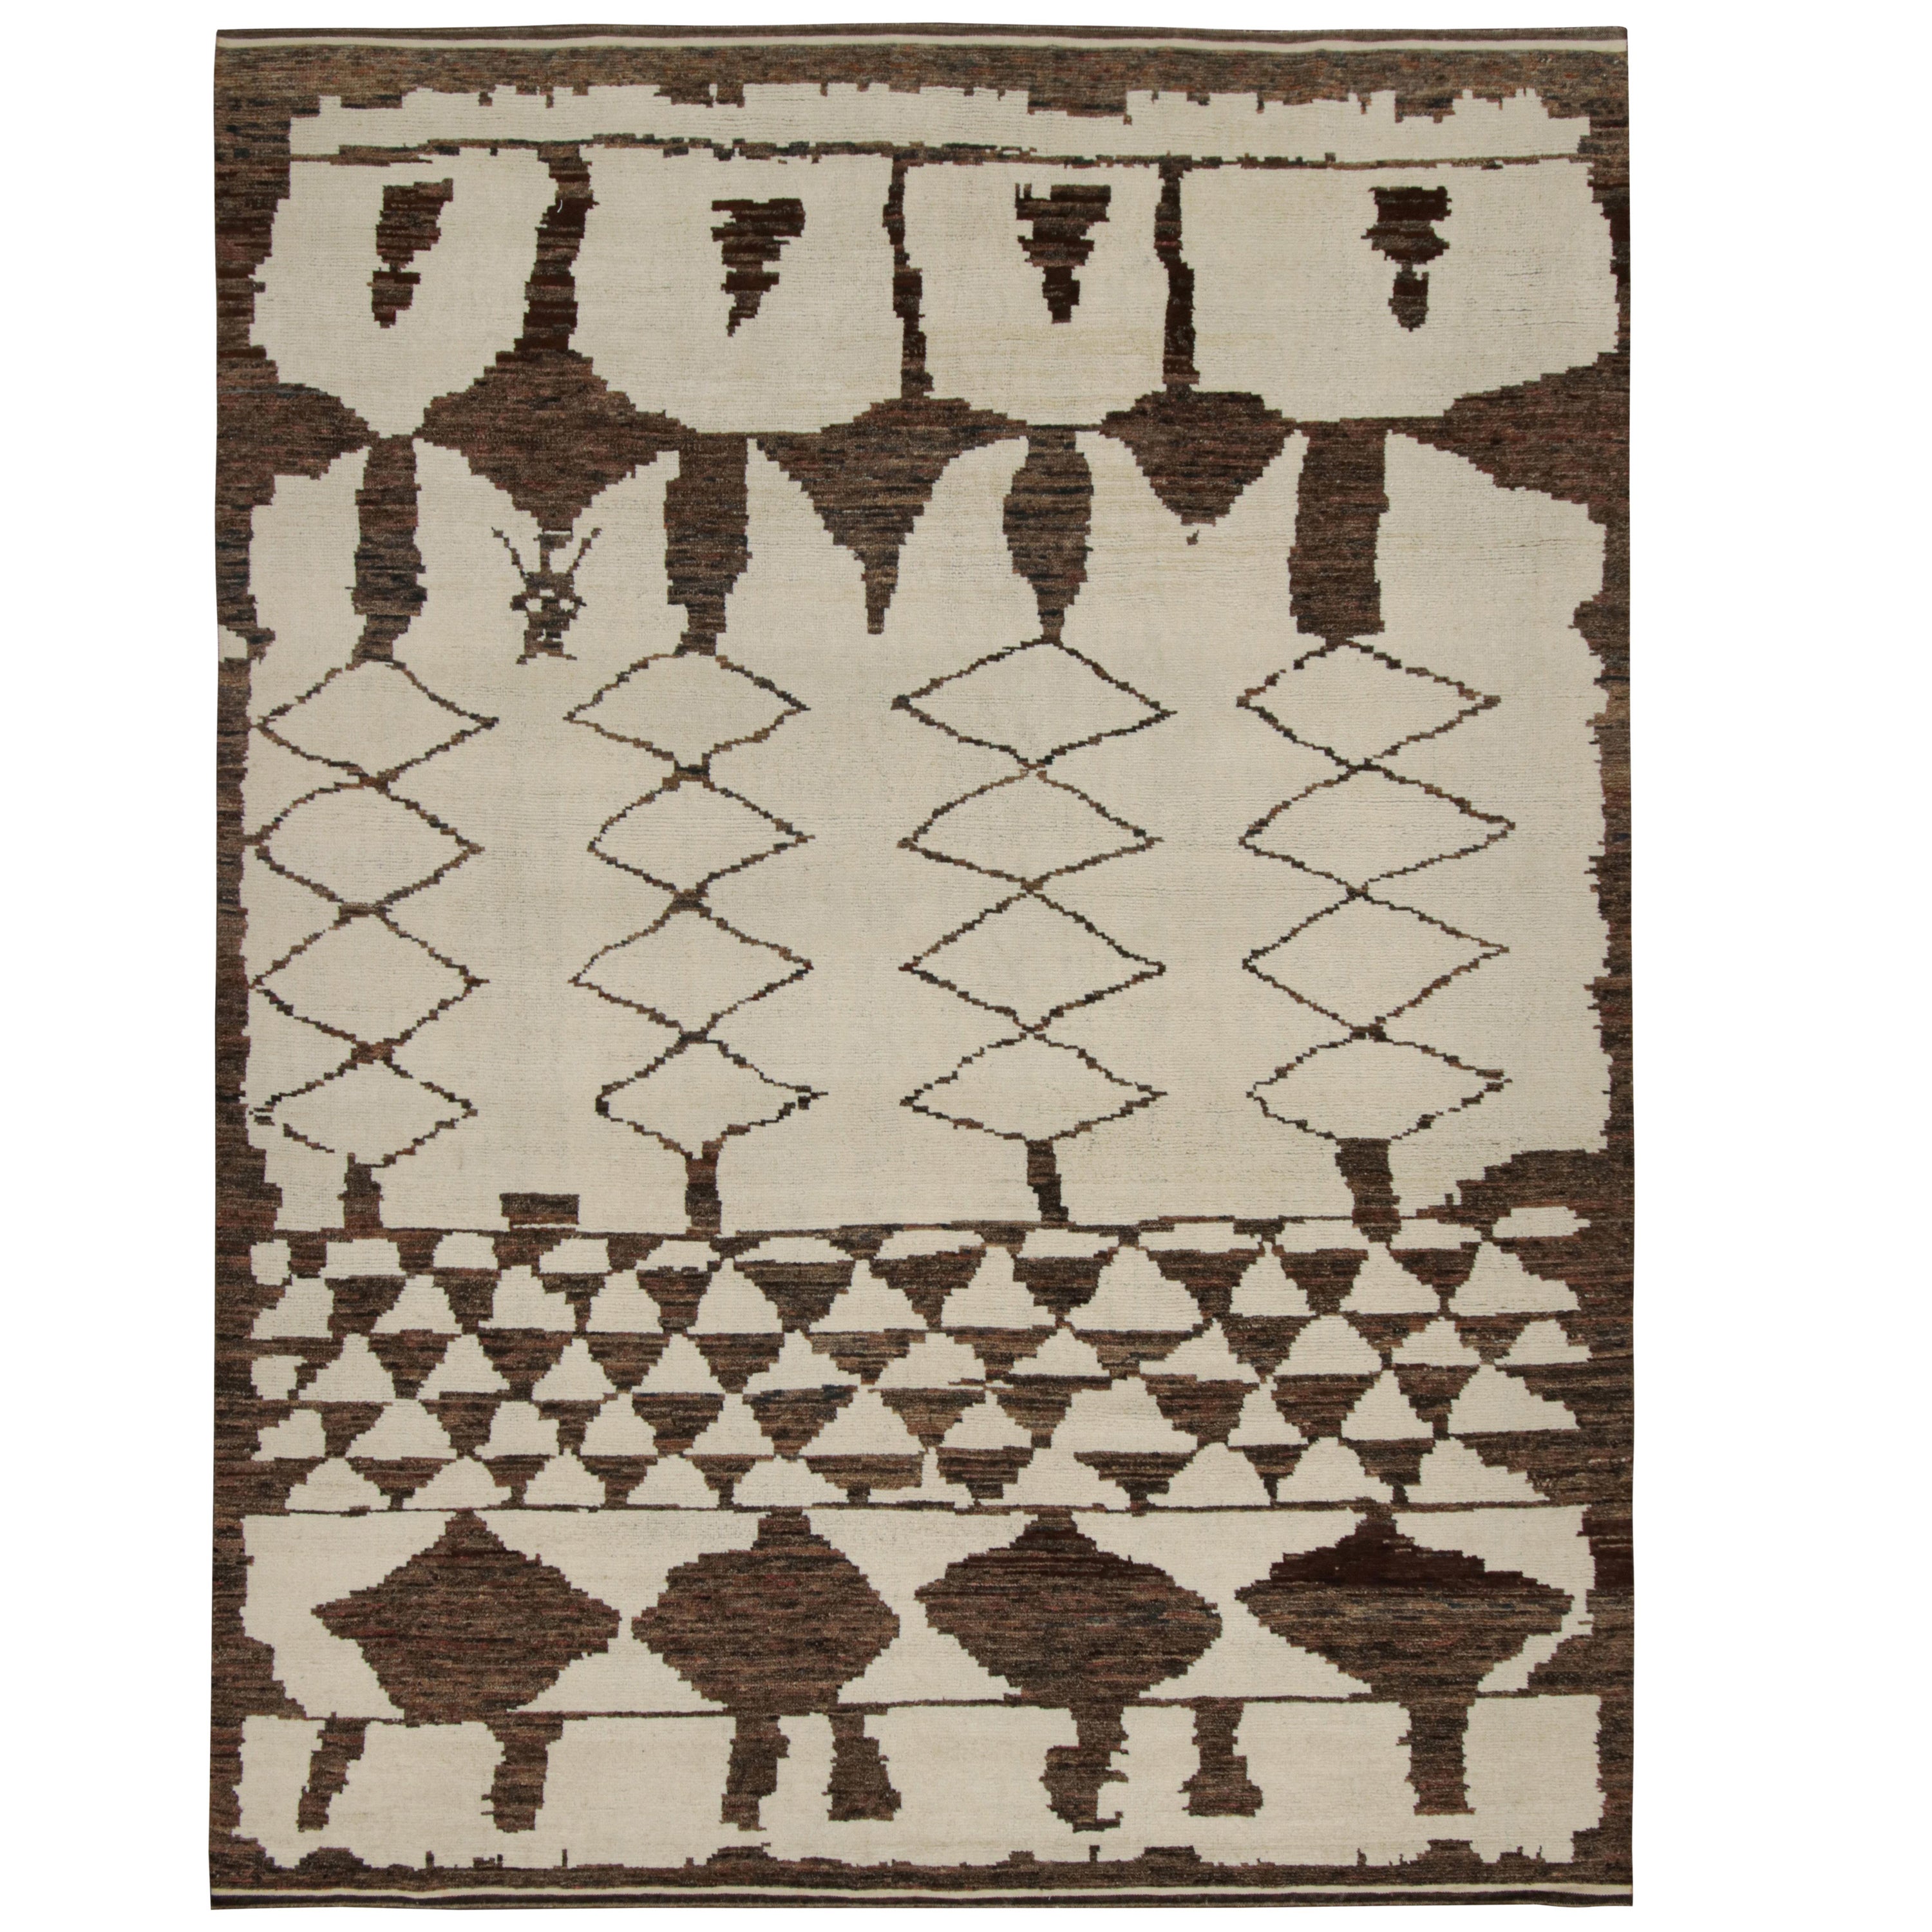 Rug & Kilim’s Modern Moroccan Style Rug in Beige and Brown Geometric Patterns